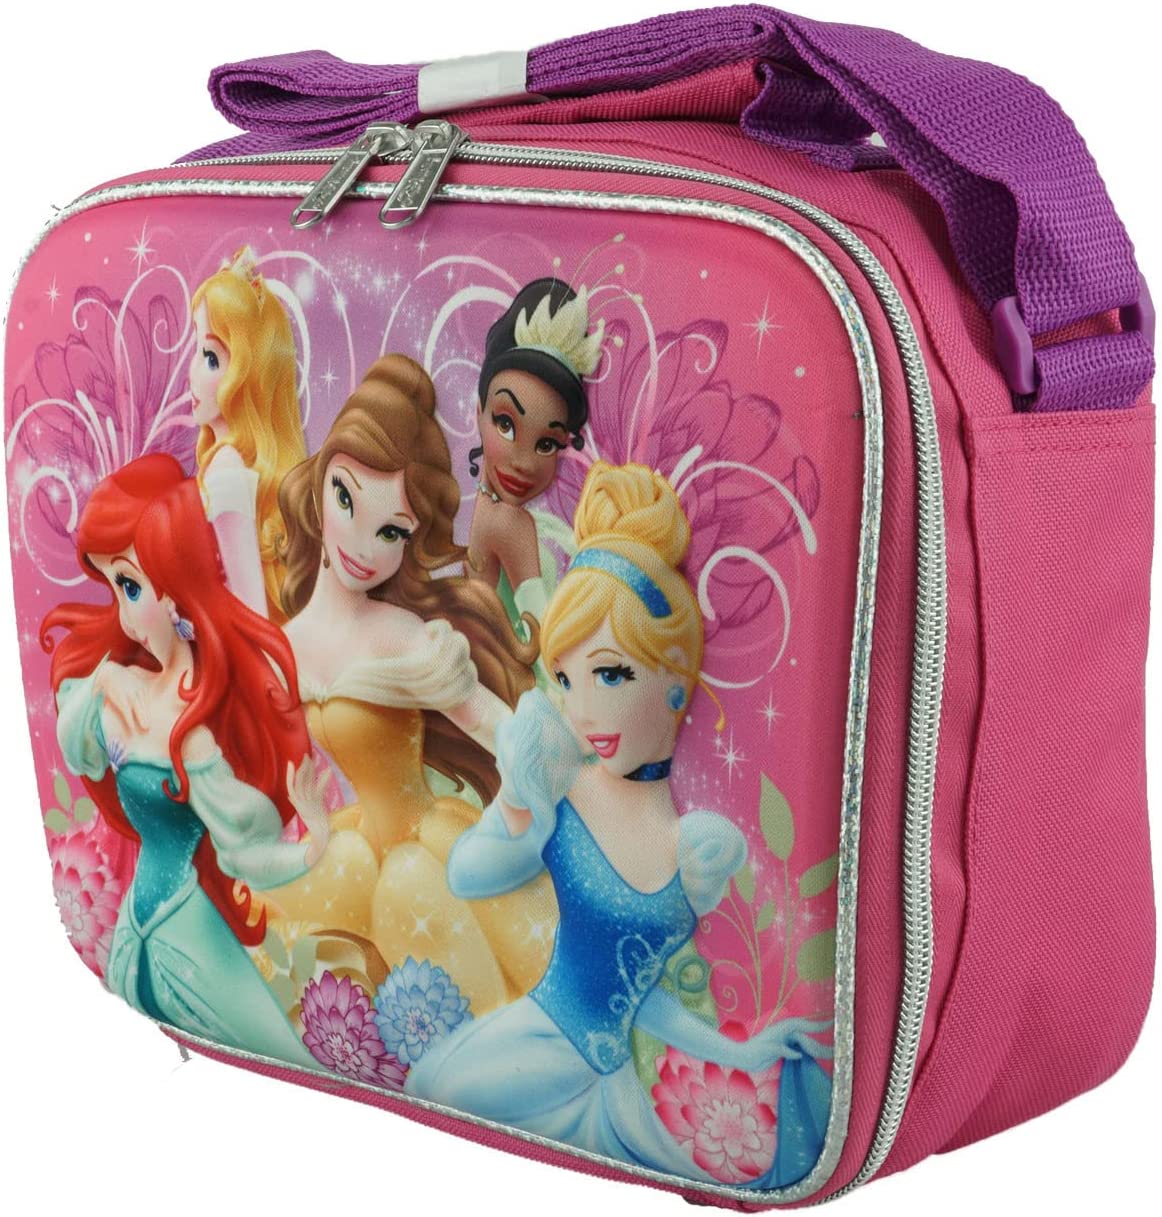 Disney Princess Lunch Box Bag 3-D EVA Molded - Ariel Belle Aurora Tiana Cinderella